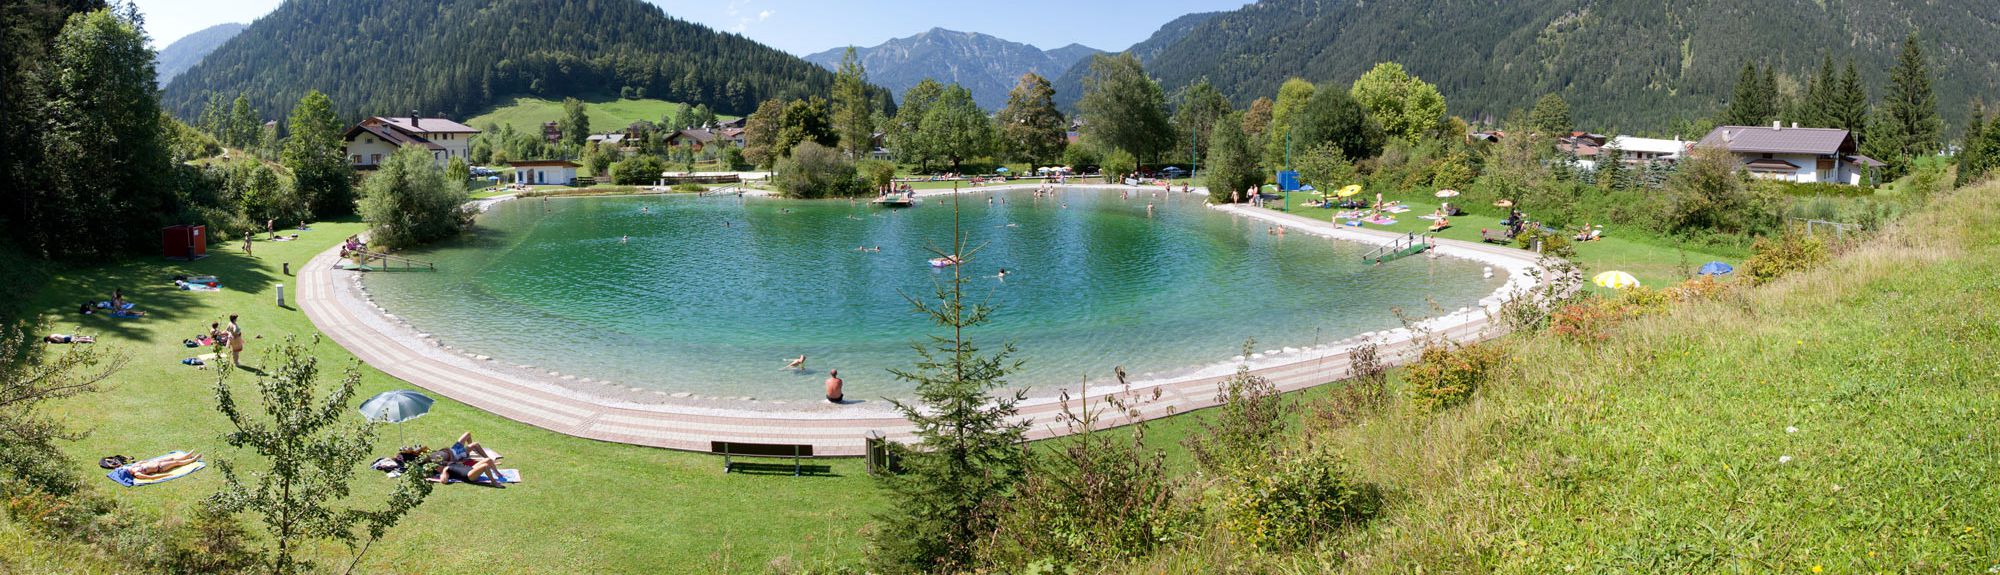 Urlaub Tirol003